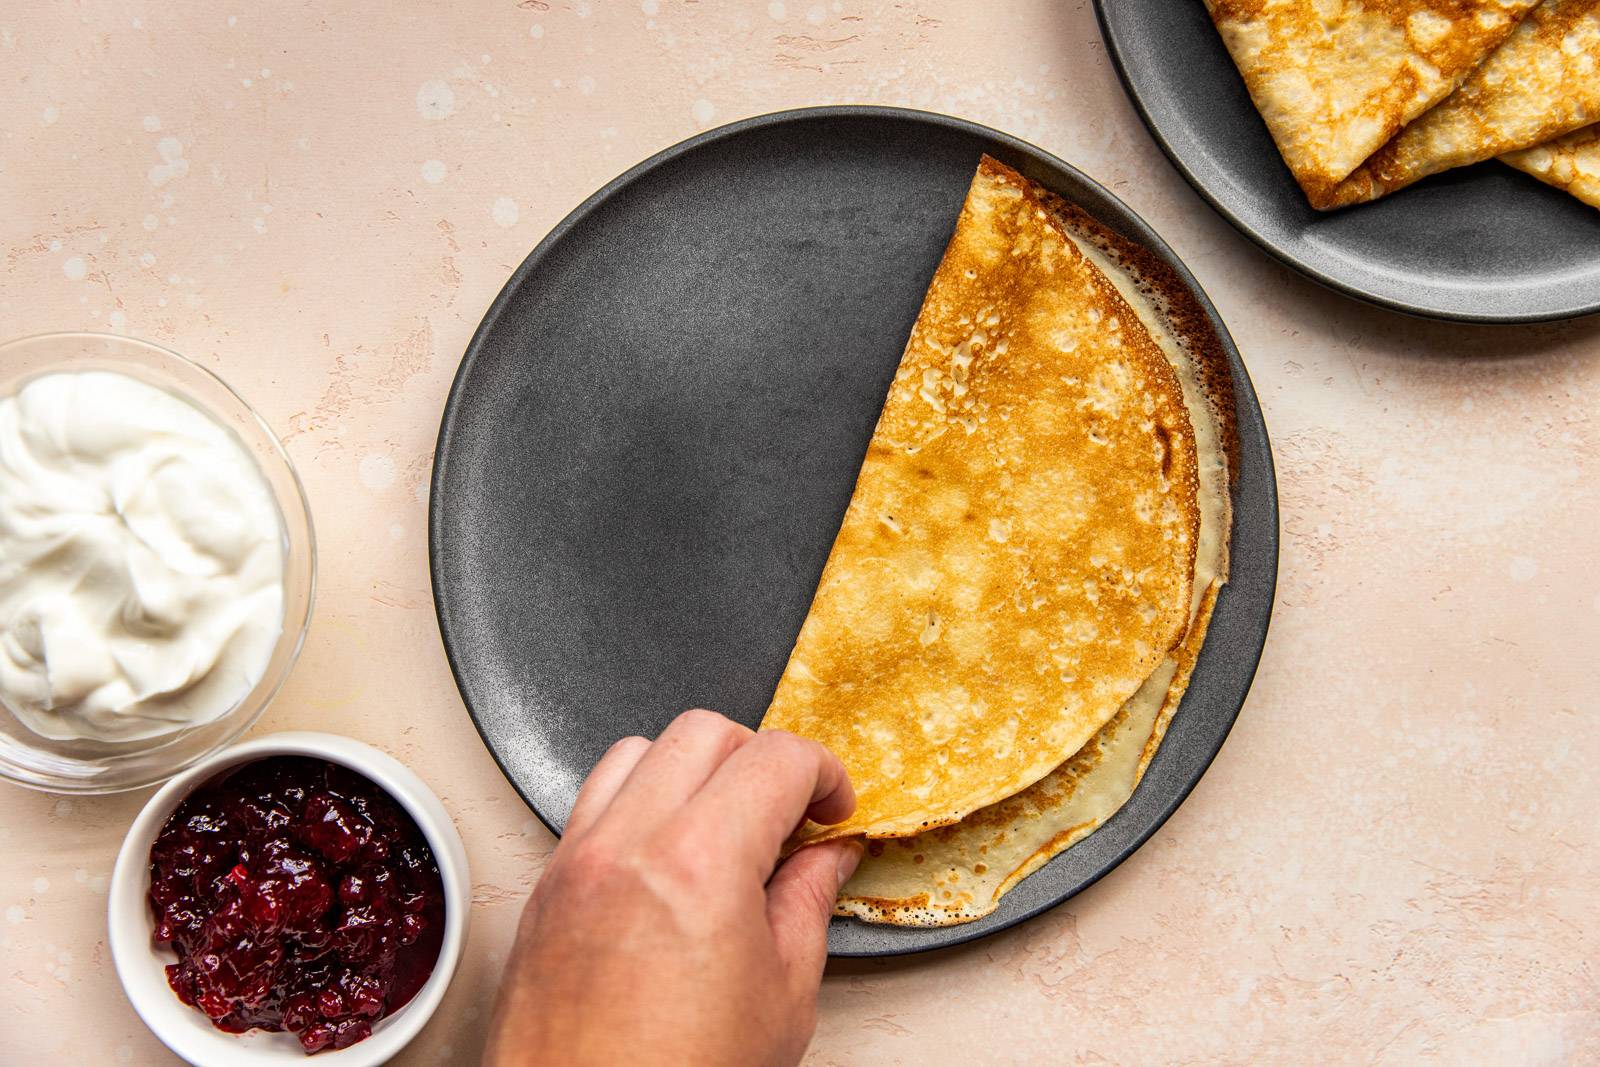 Swedish pancake folded in half on a plate.